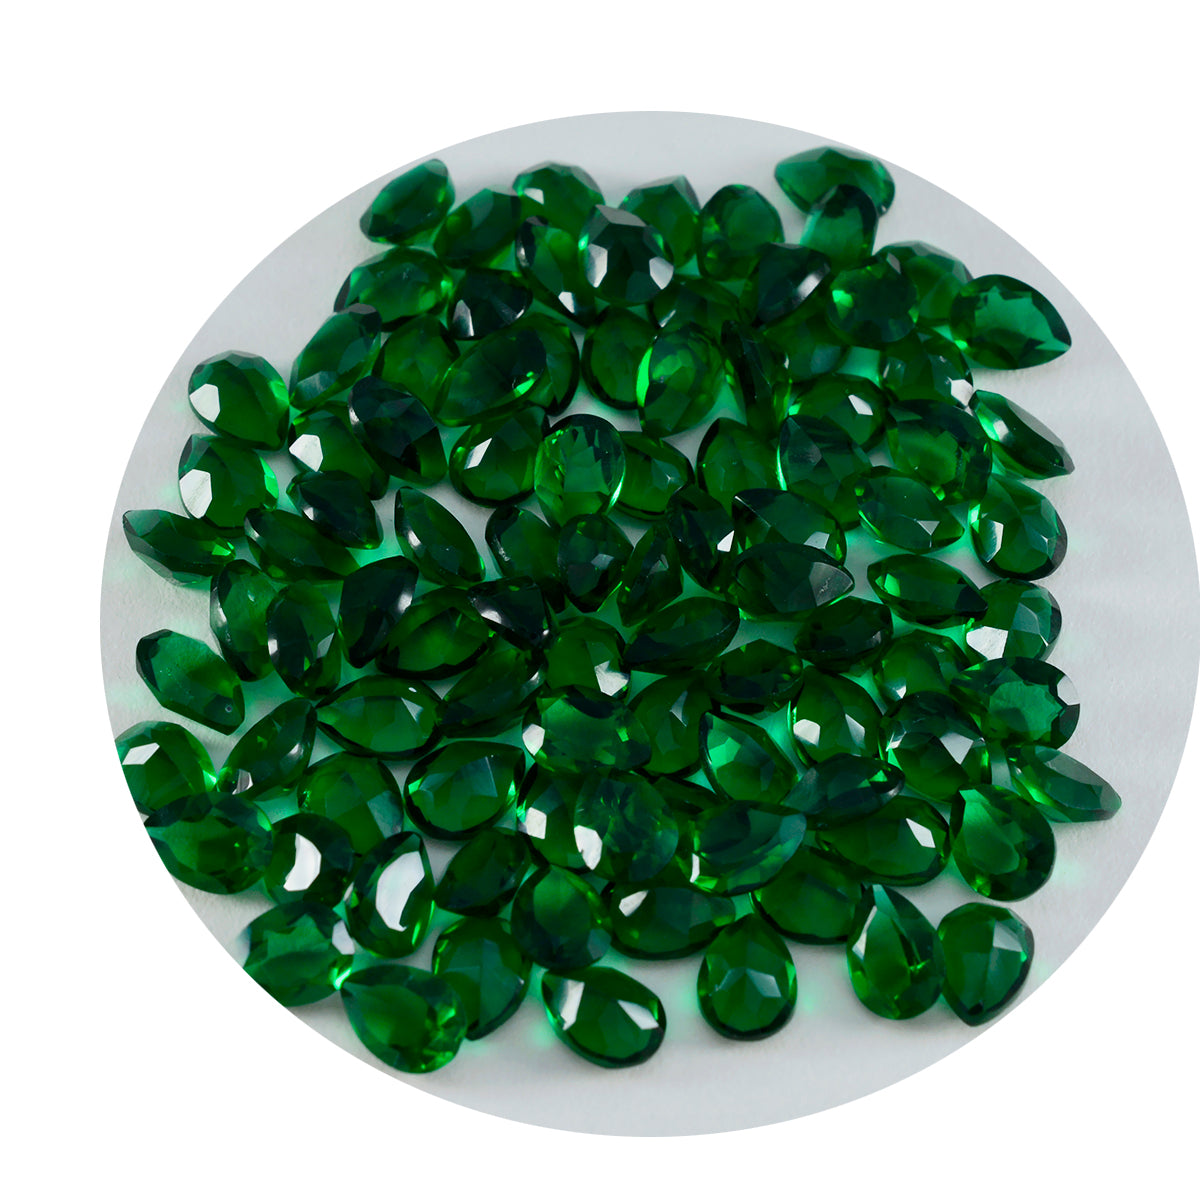 Riyogems 1PC Green Emerald CZ Faceted 4x6 mm Pear Shape handsome Quality Loose Gemstone